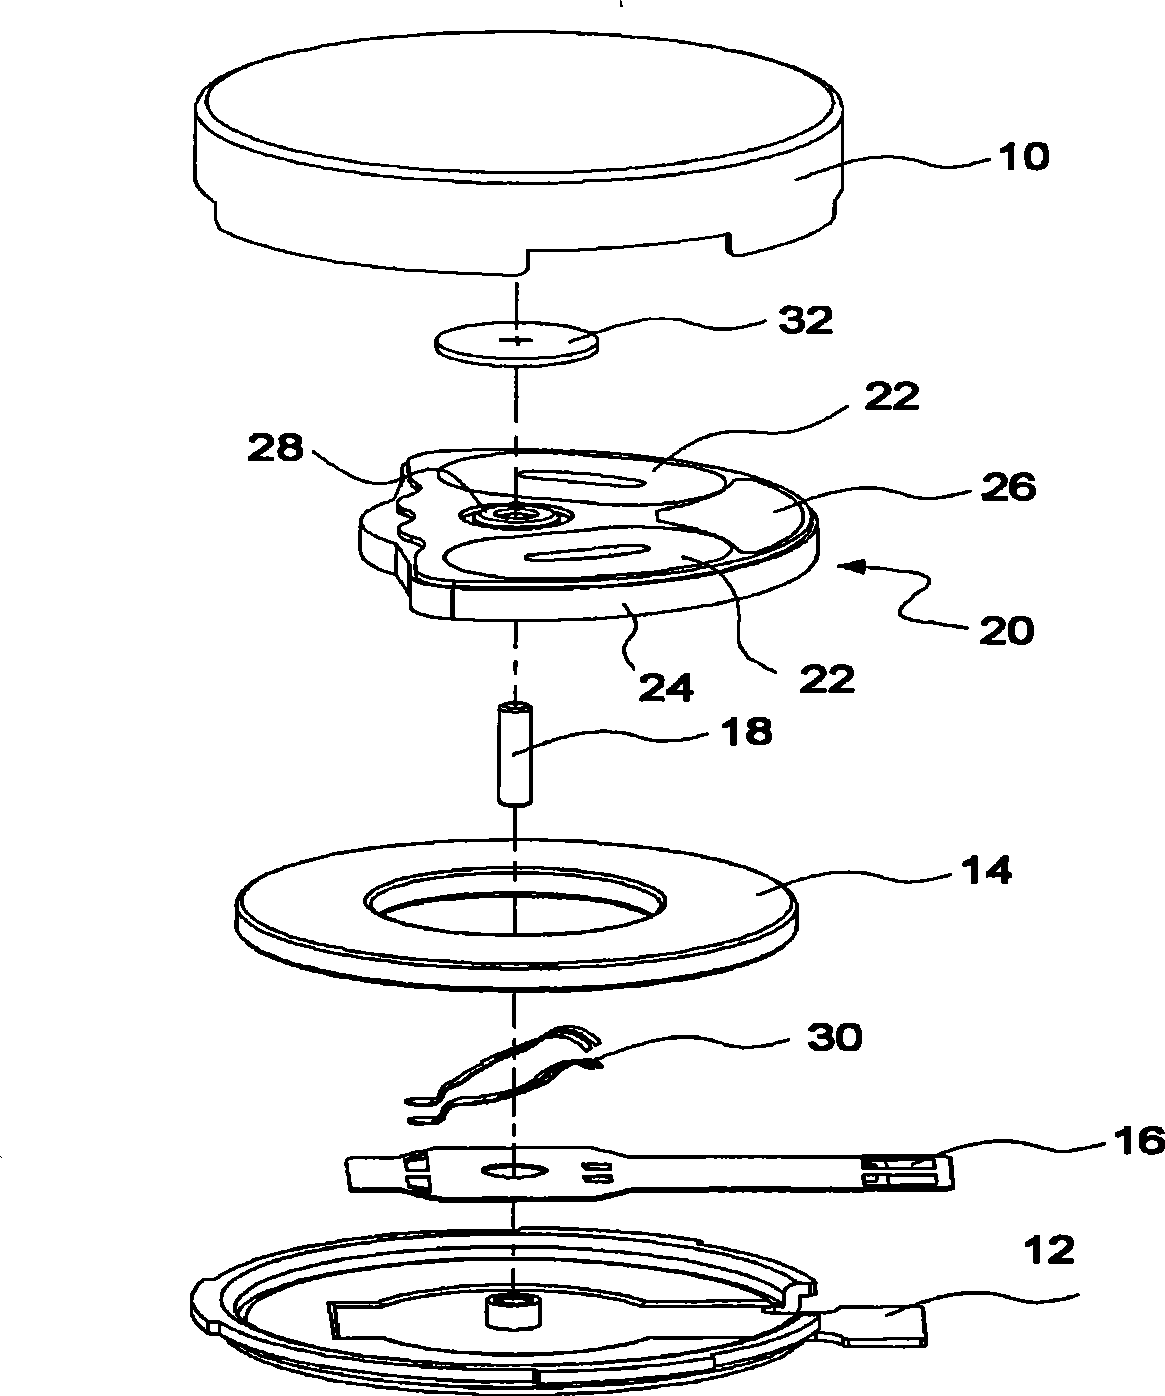 Flat oscillating motor